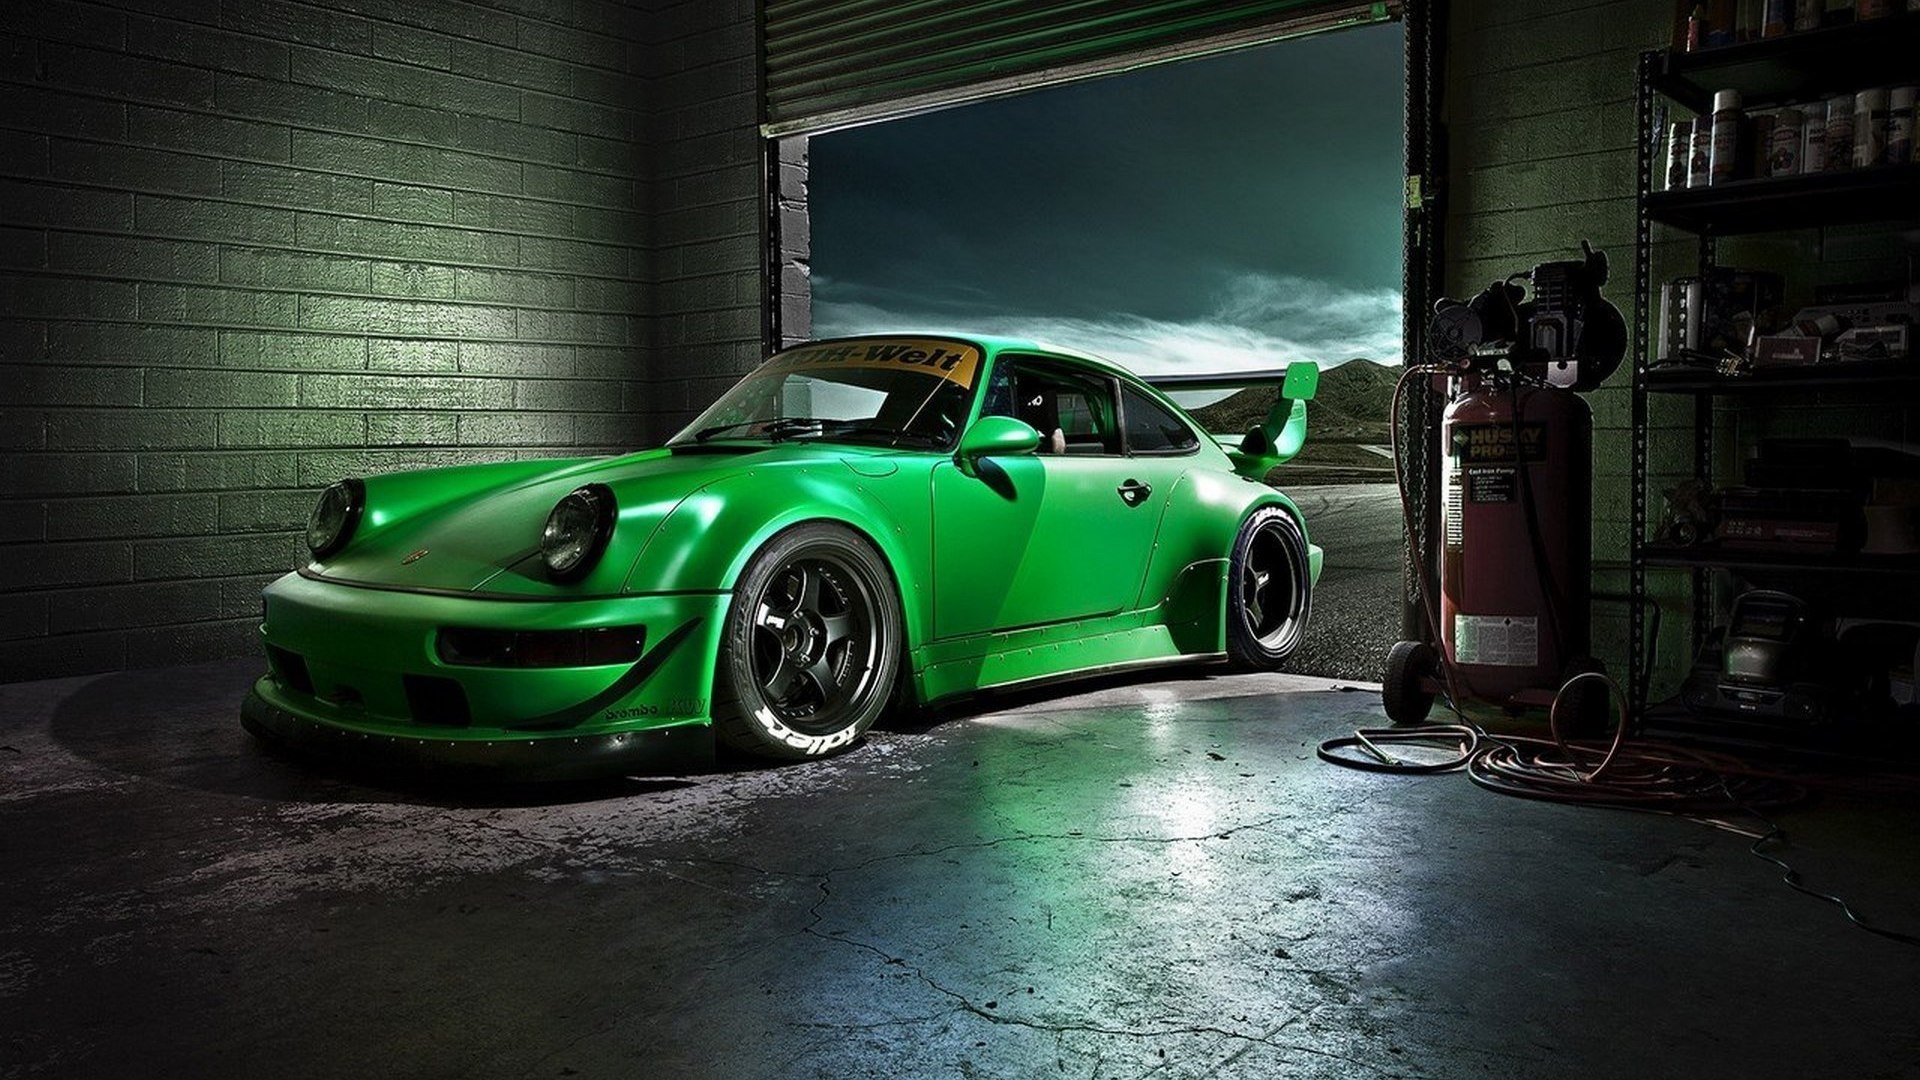 Green Porsche Carrera for 1920 x 1080 HDTV 1080p resolution